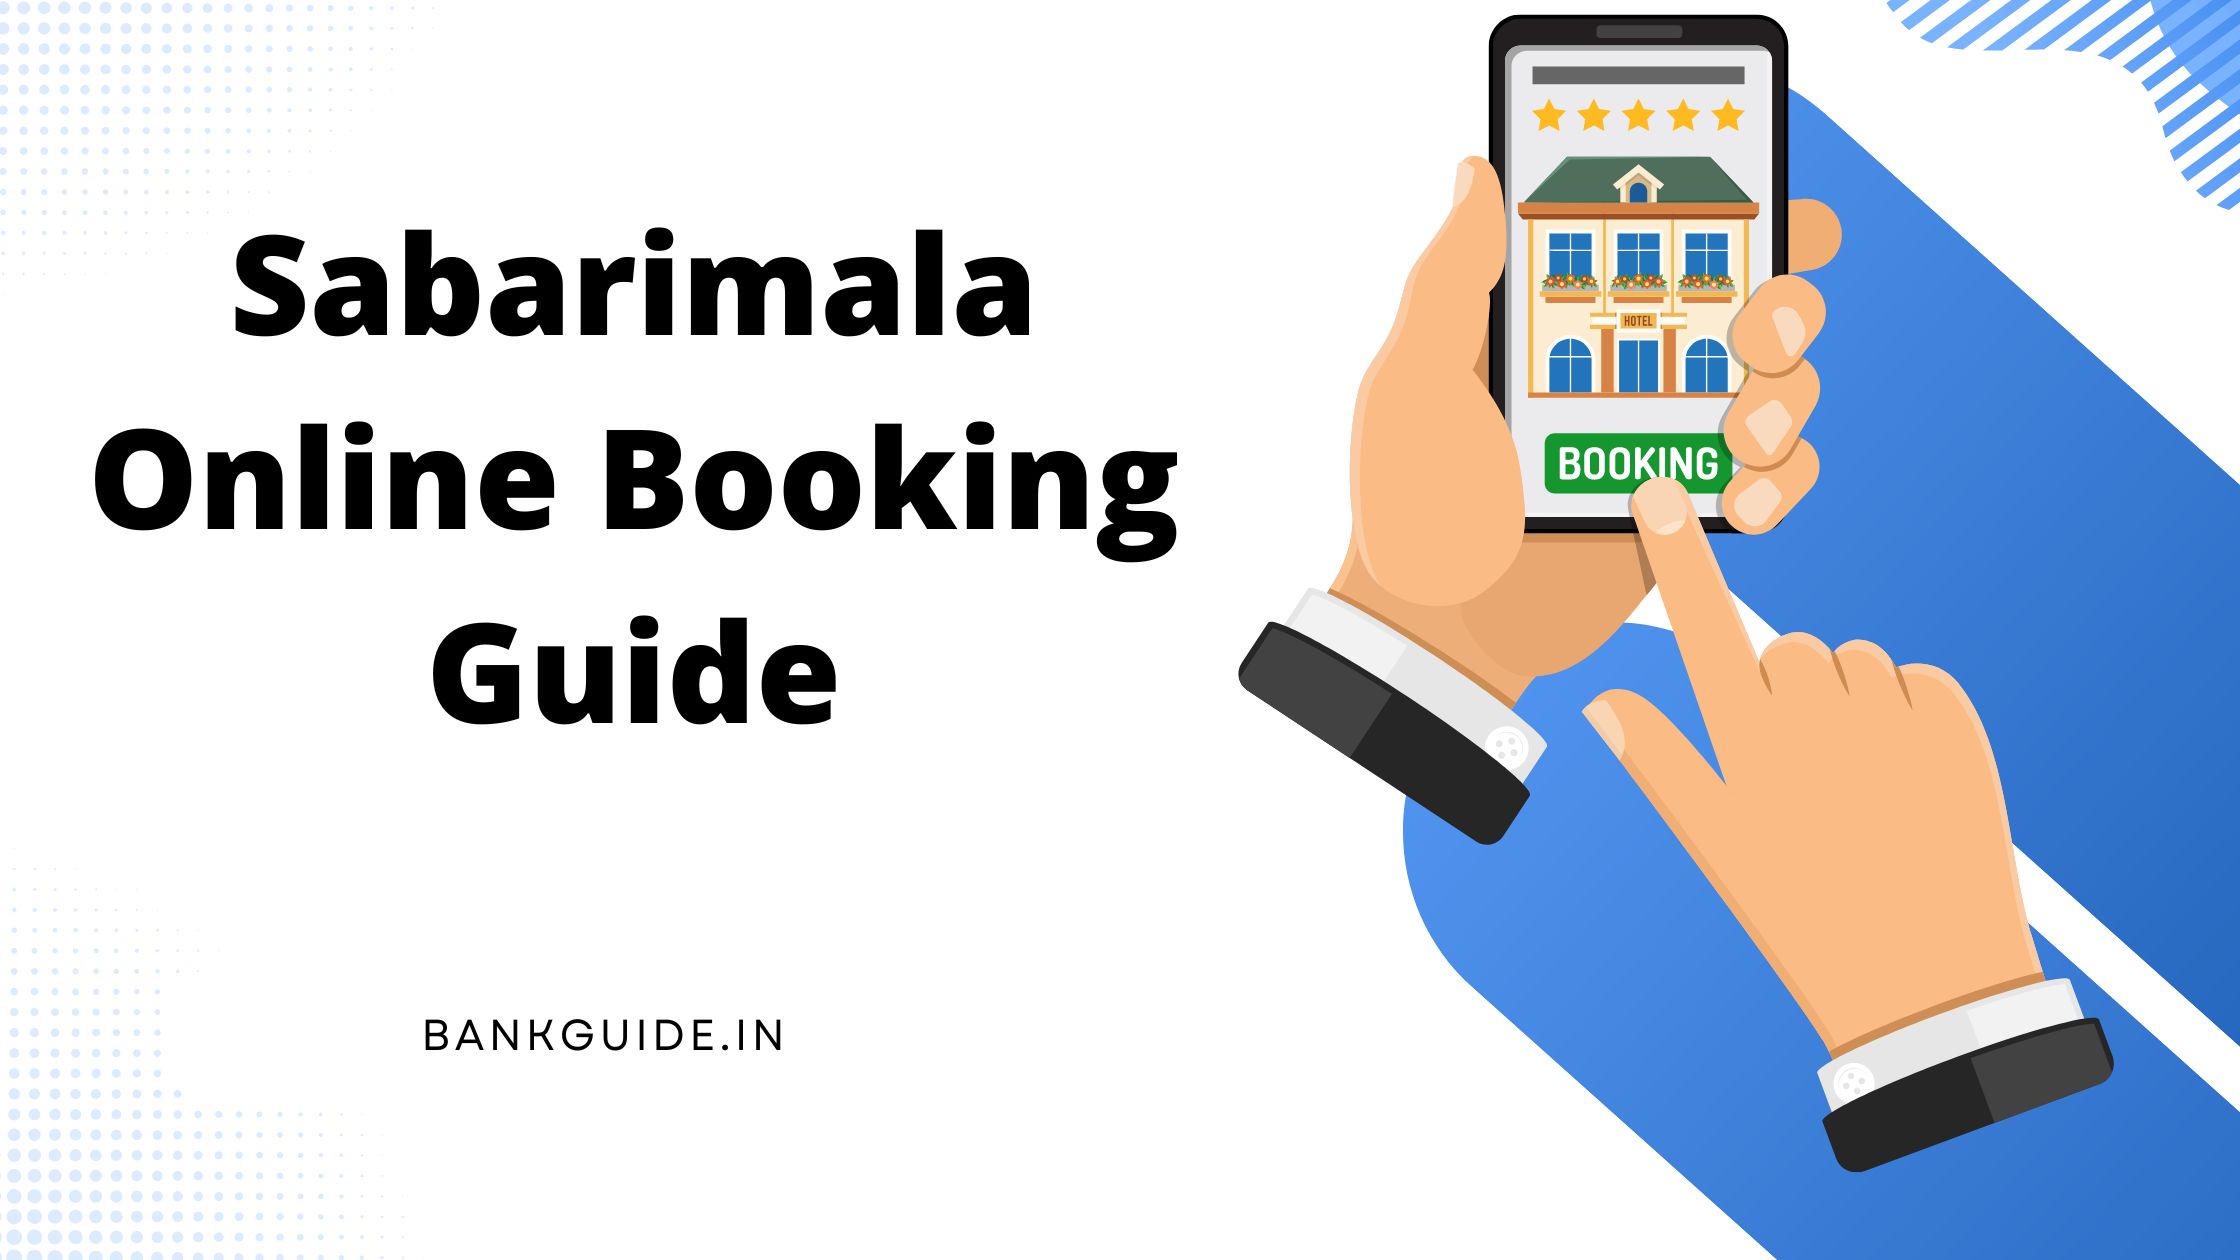 Sabarimala online booking guide